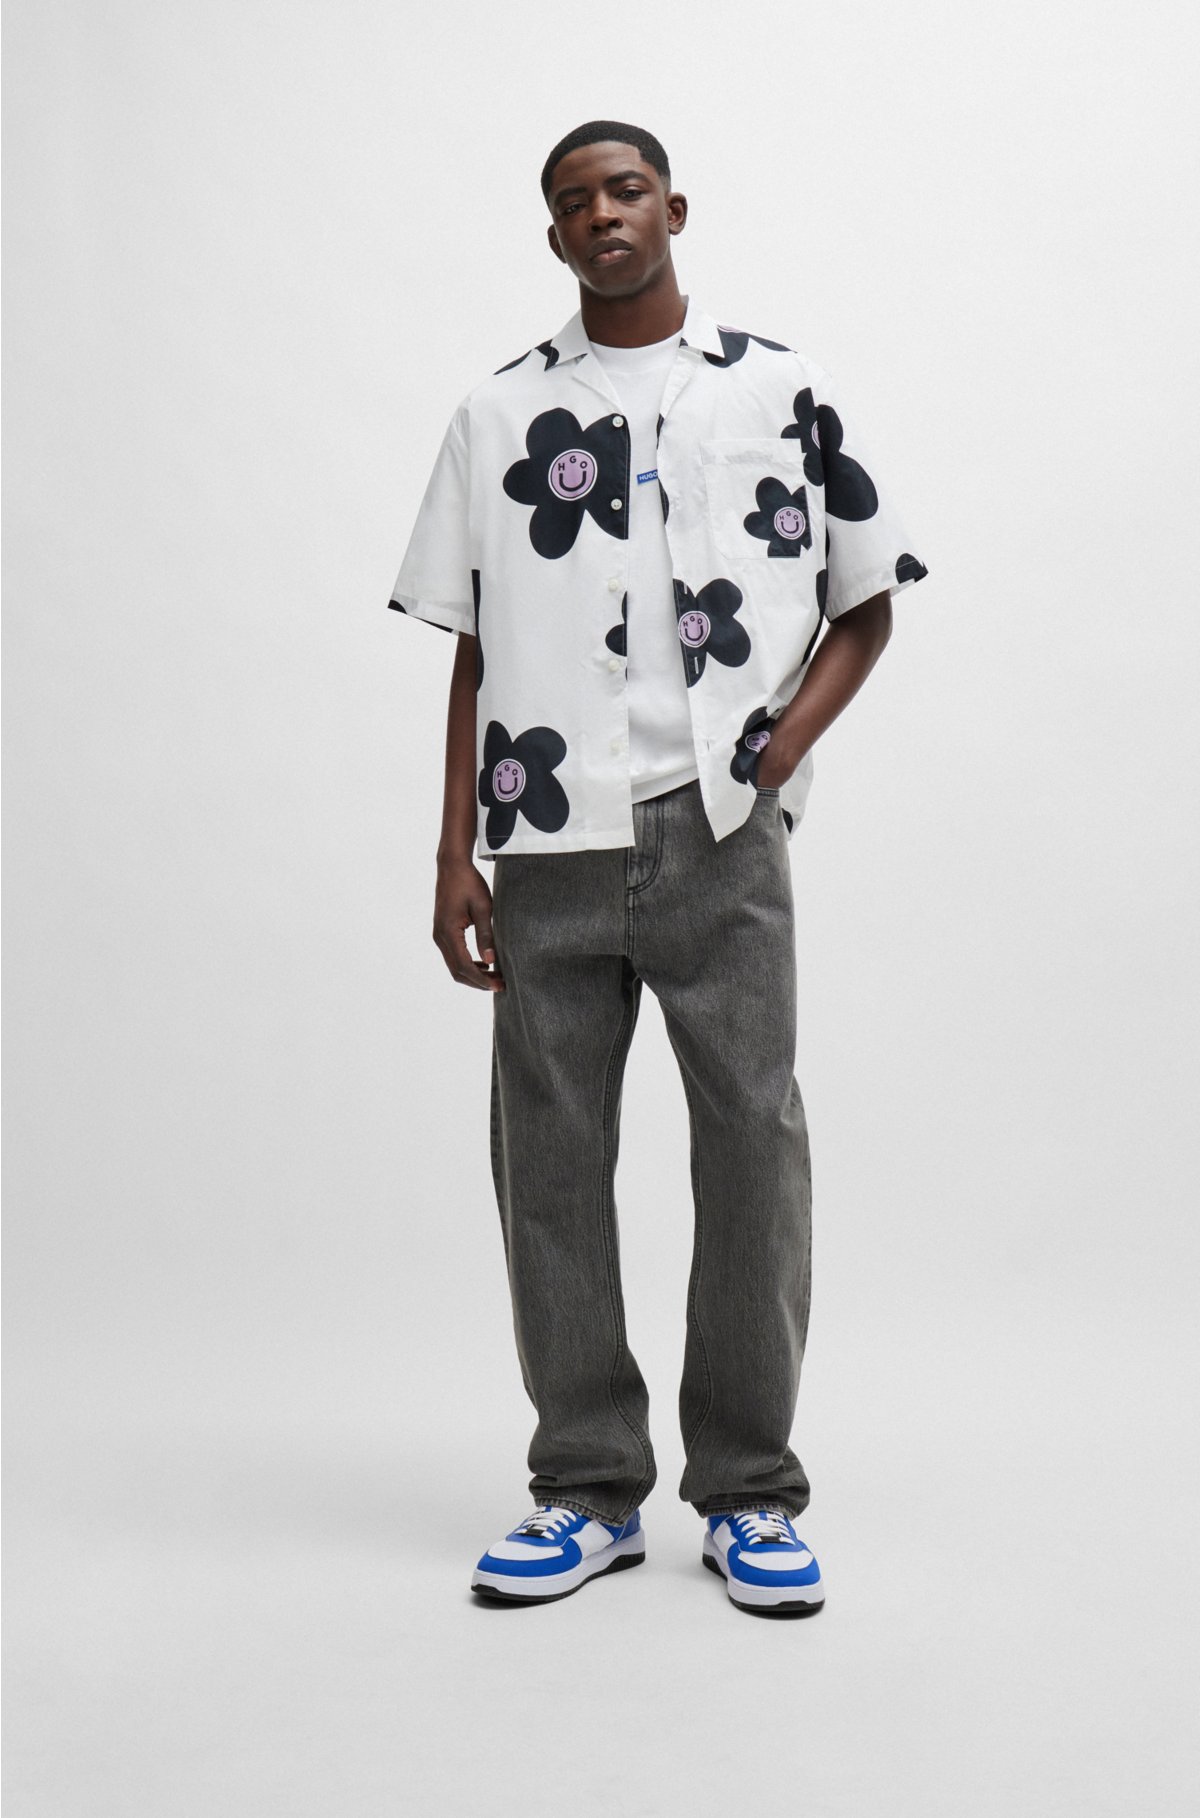 HUGO - Oversized-fit shirt in floral-print cotton poplin